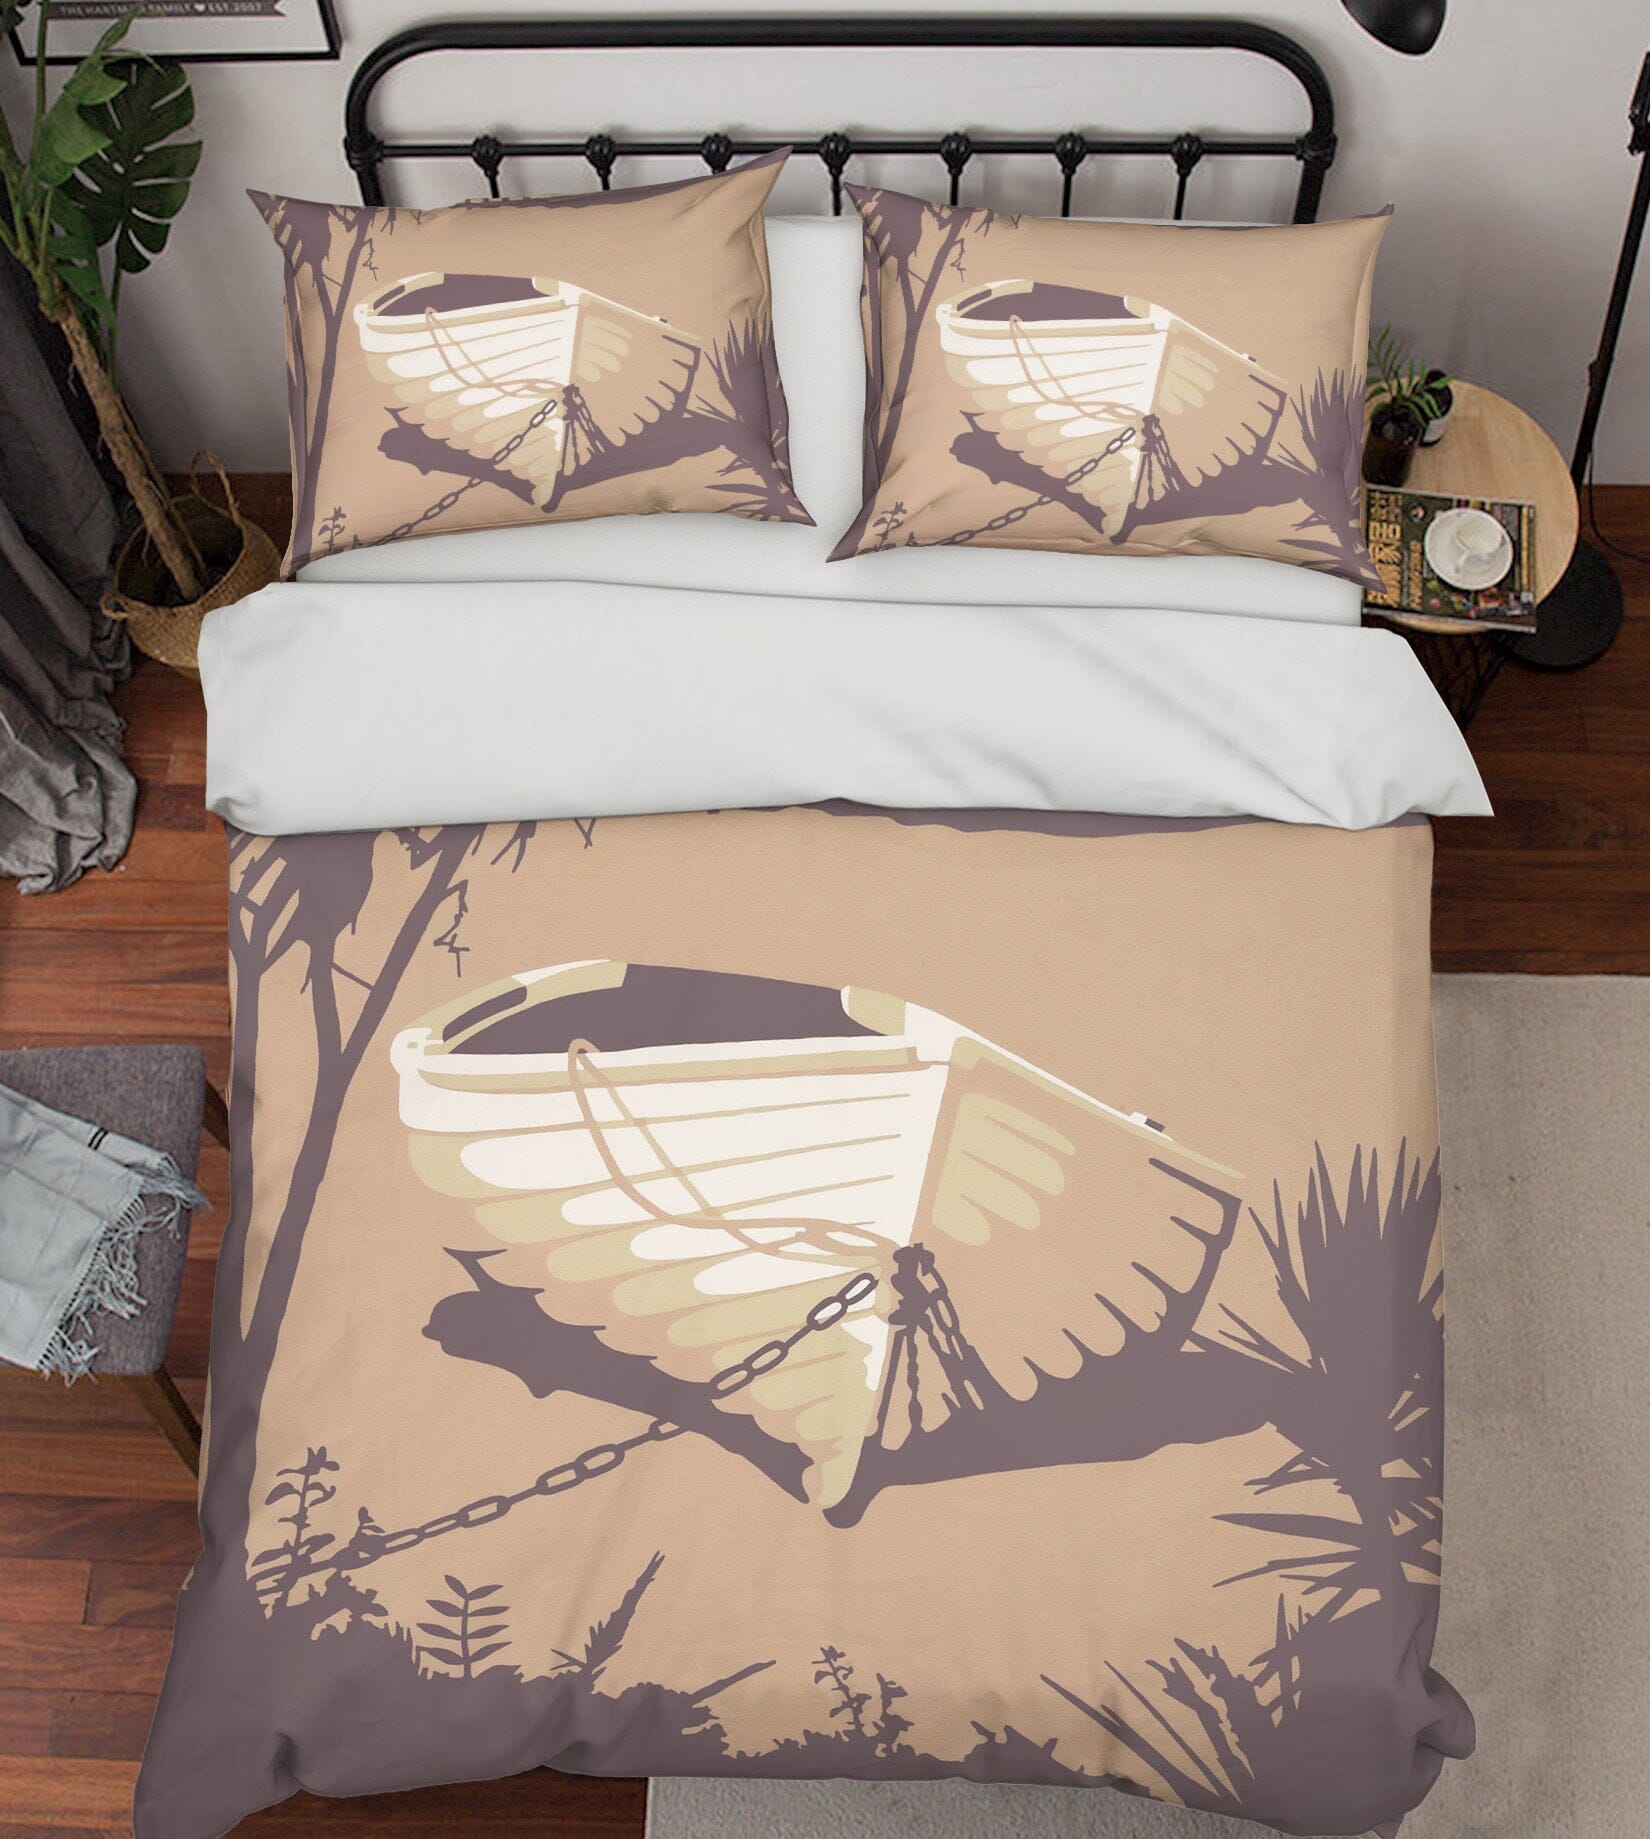 3D Sandbanks The Purbecks 2050 Steve Read Bedding Bed Pillowcases Quilt Quiet Covers AJ Creativity Home 